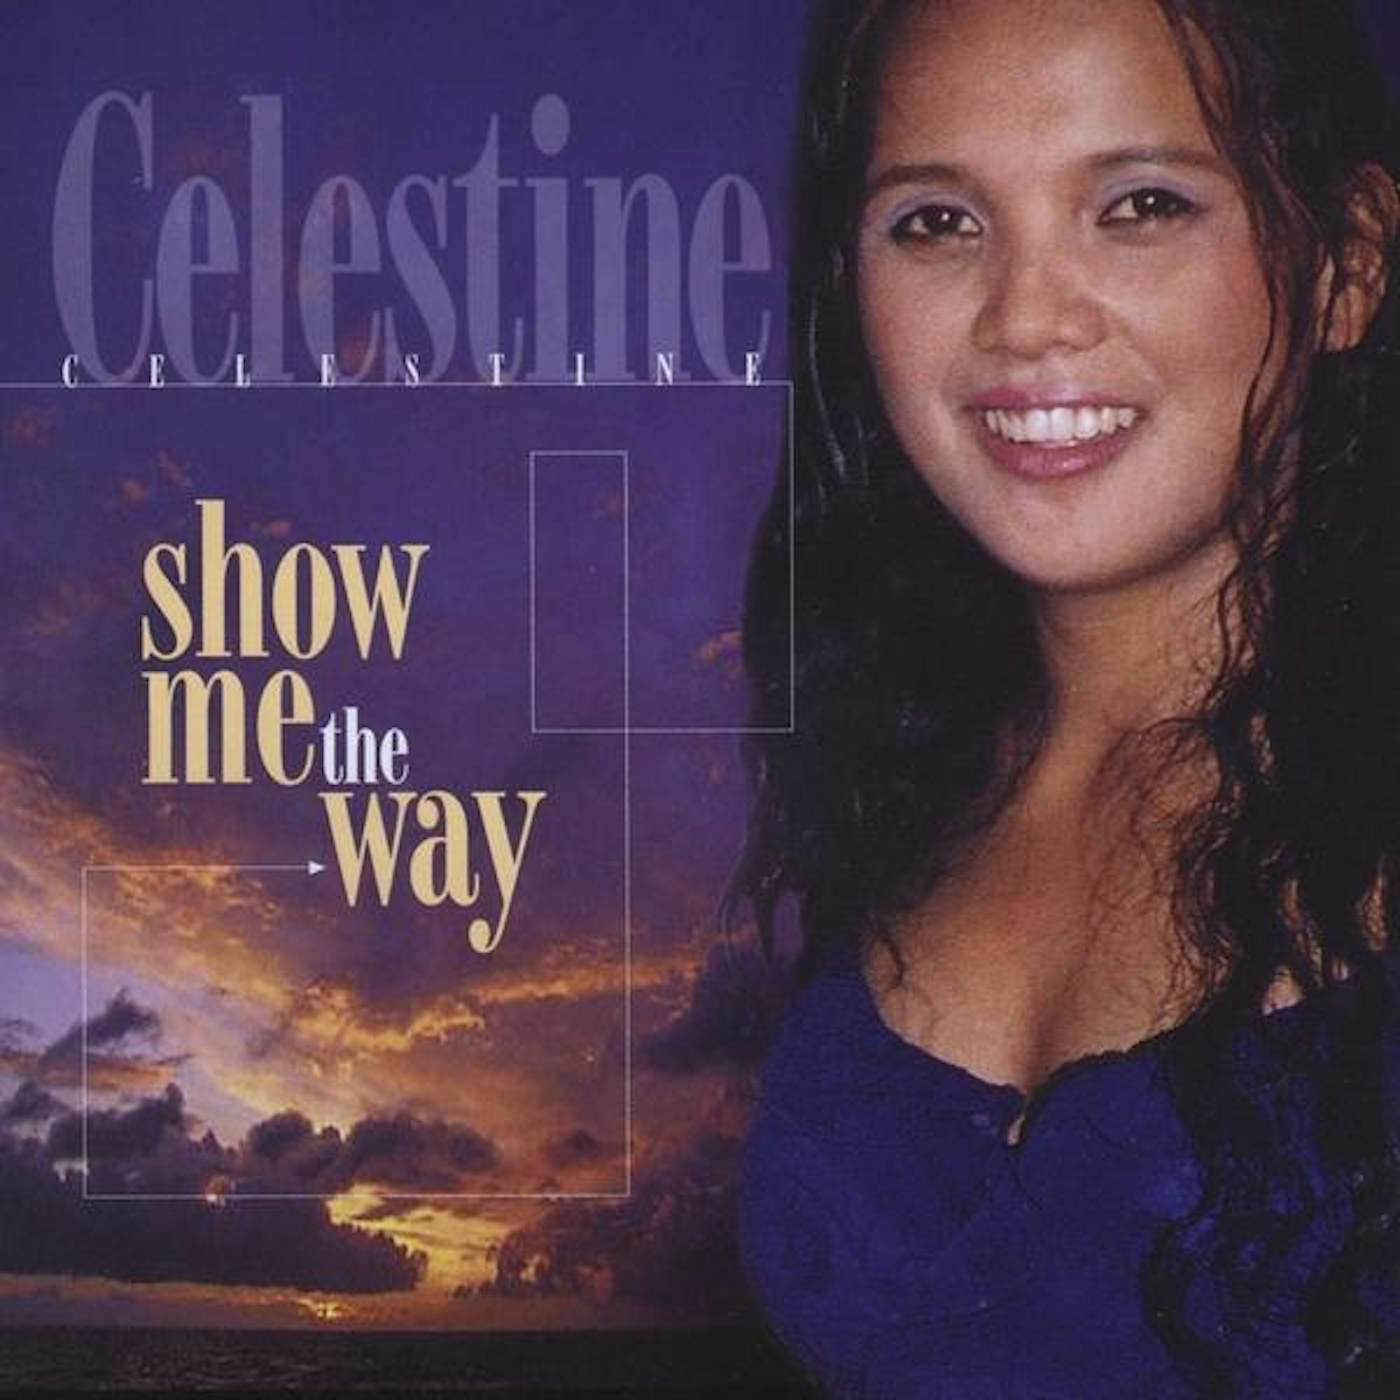 Celestine SHOW ME THE WAY CD